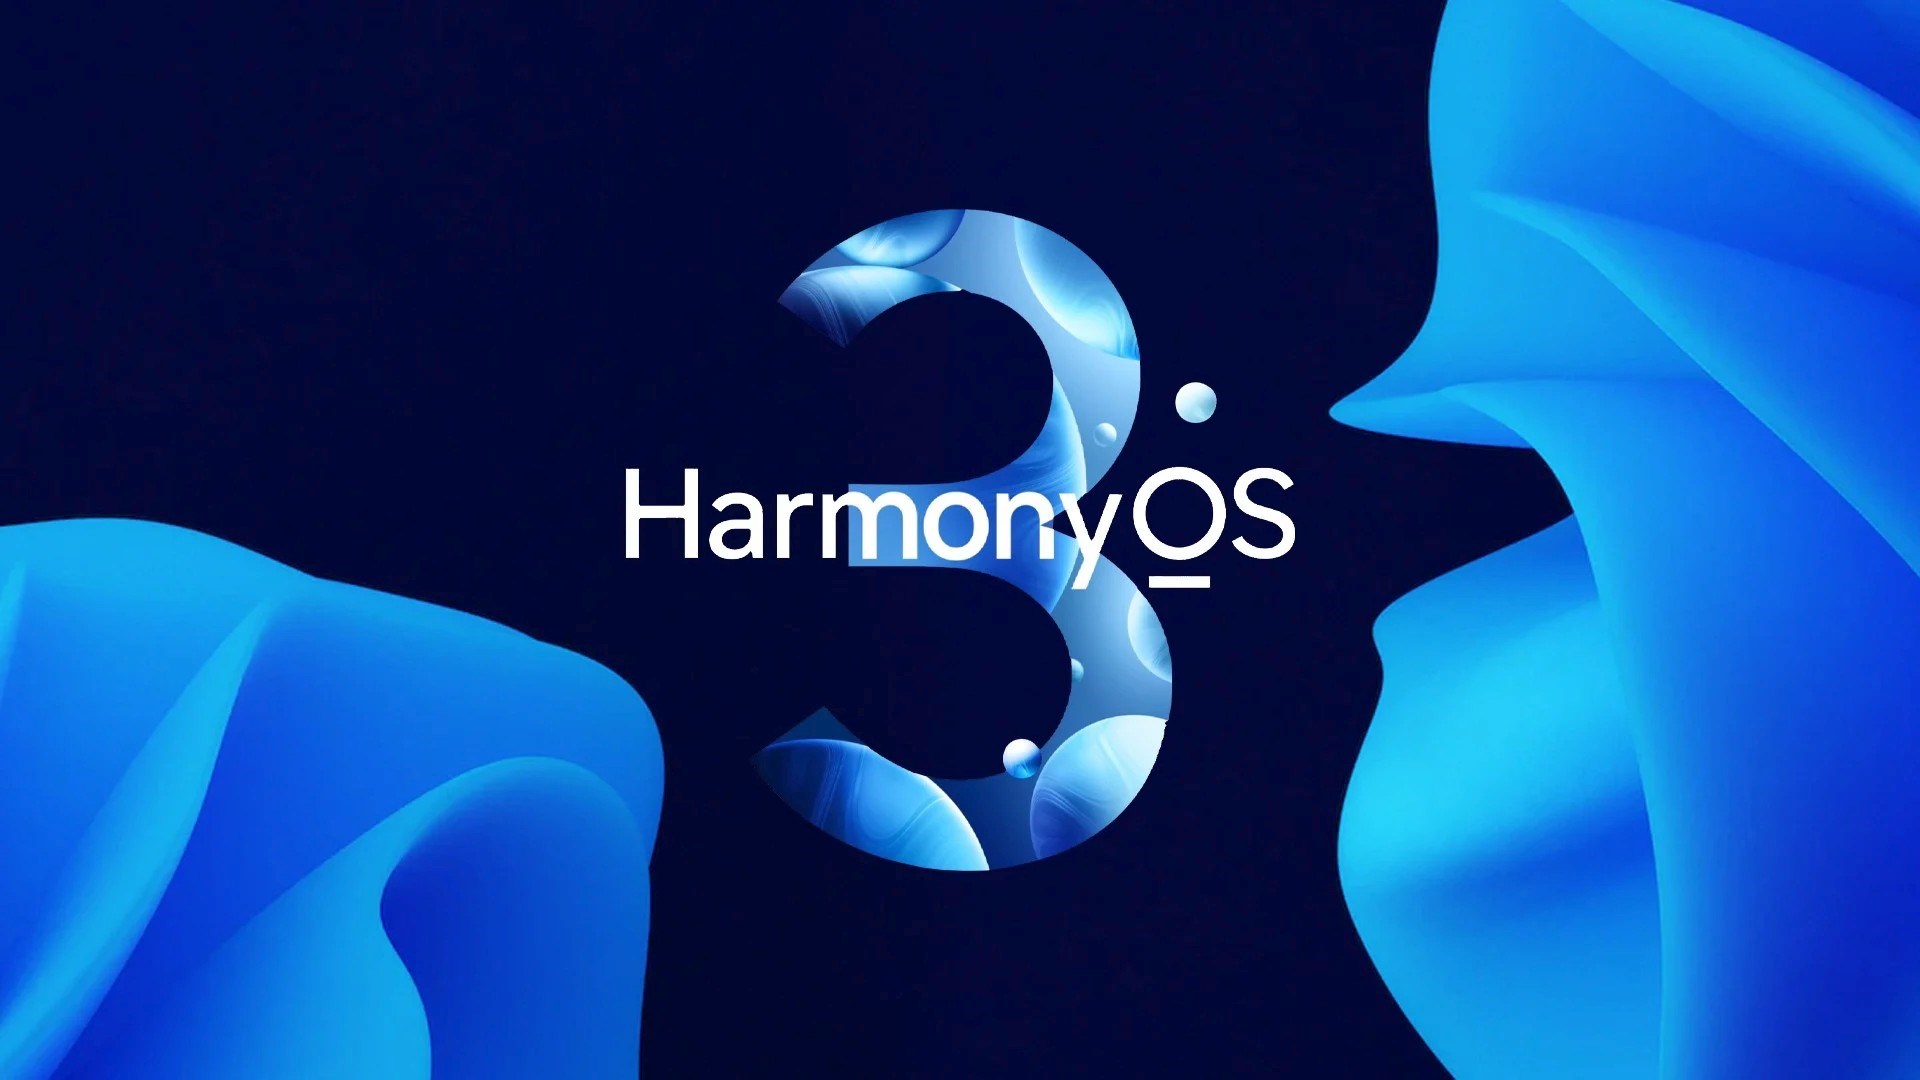 HarmonyOS yüklü cihaz sayısı 320 milyonu geçti